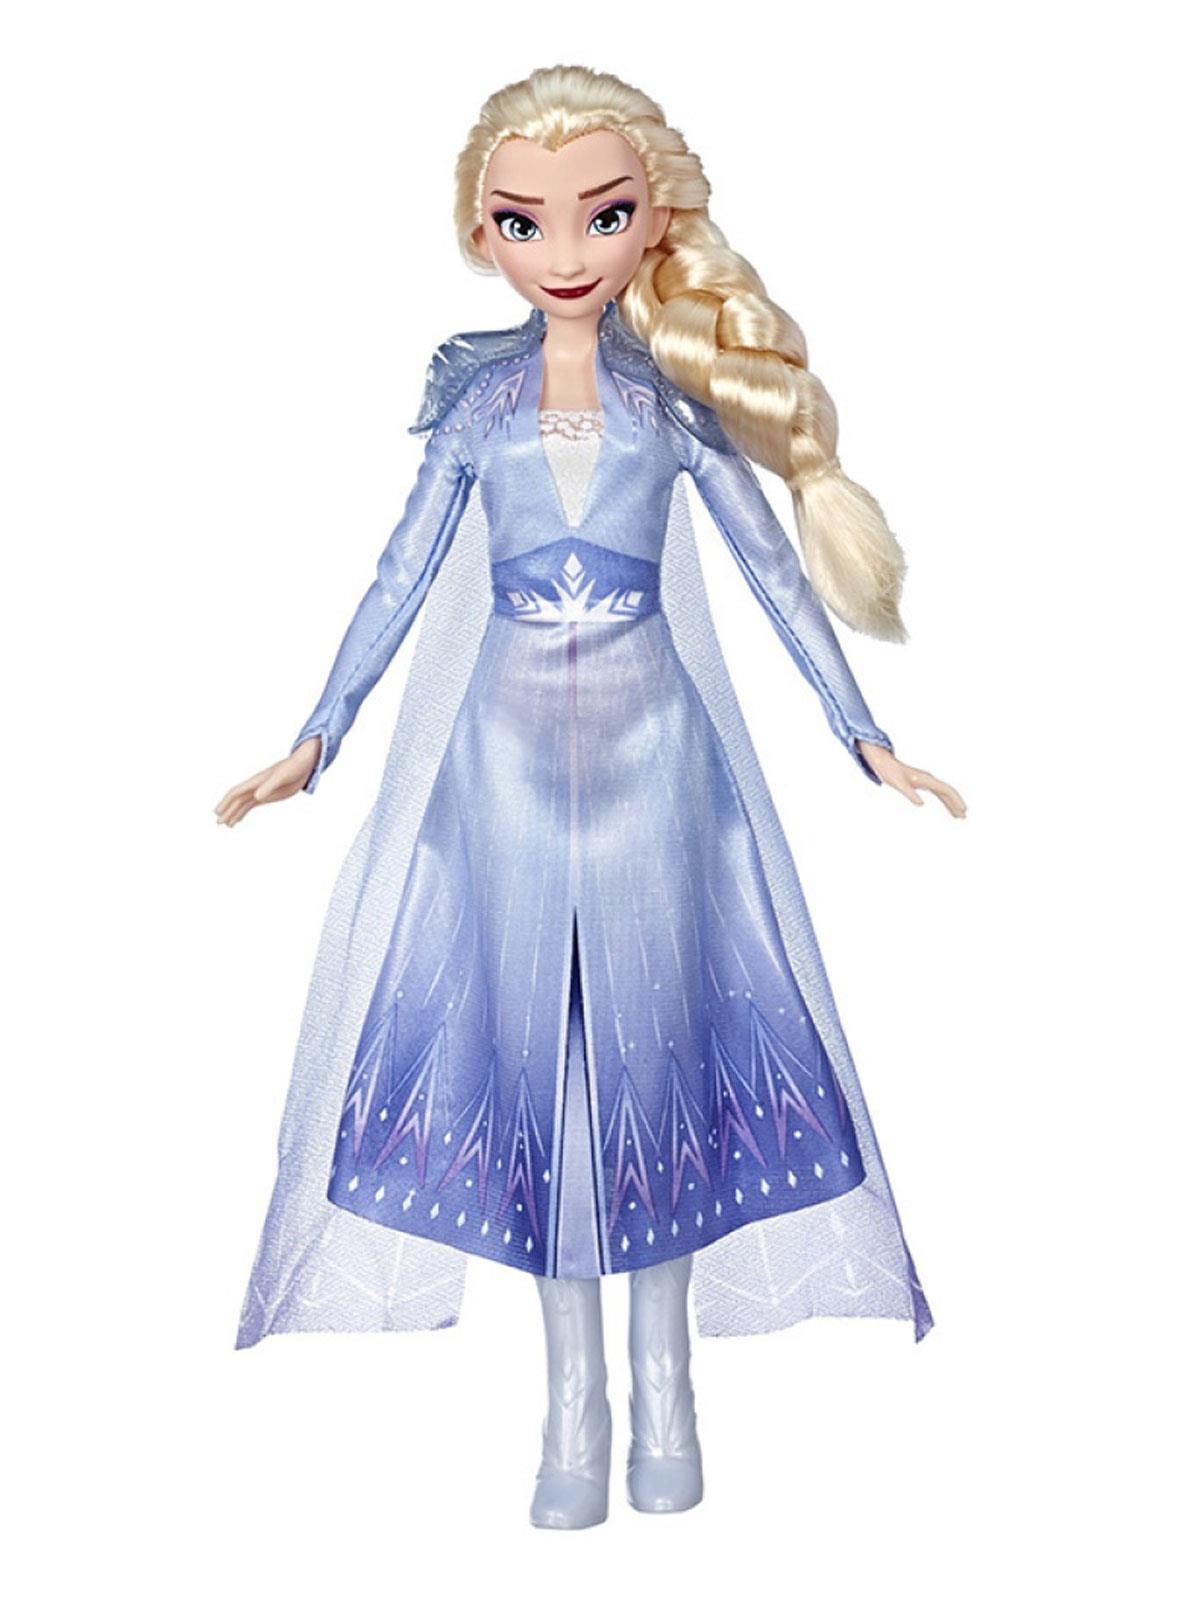 Frozen 2 Elsa Bebek